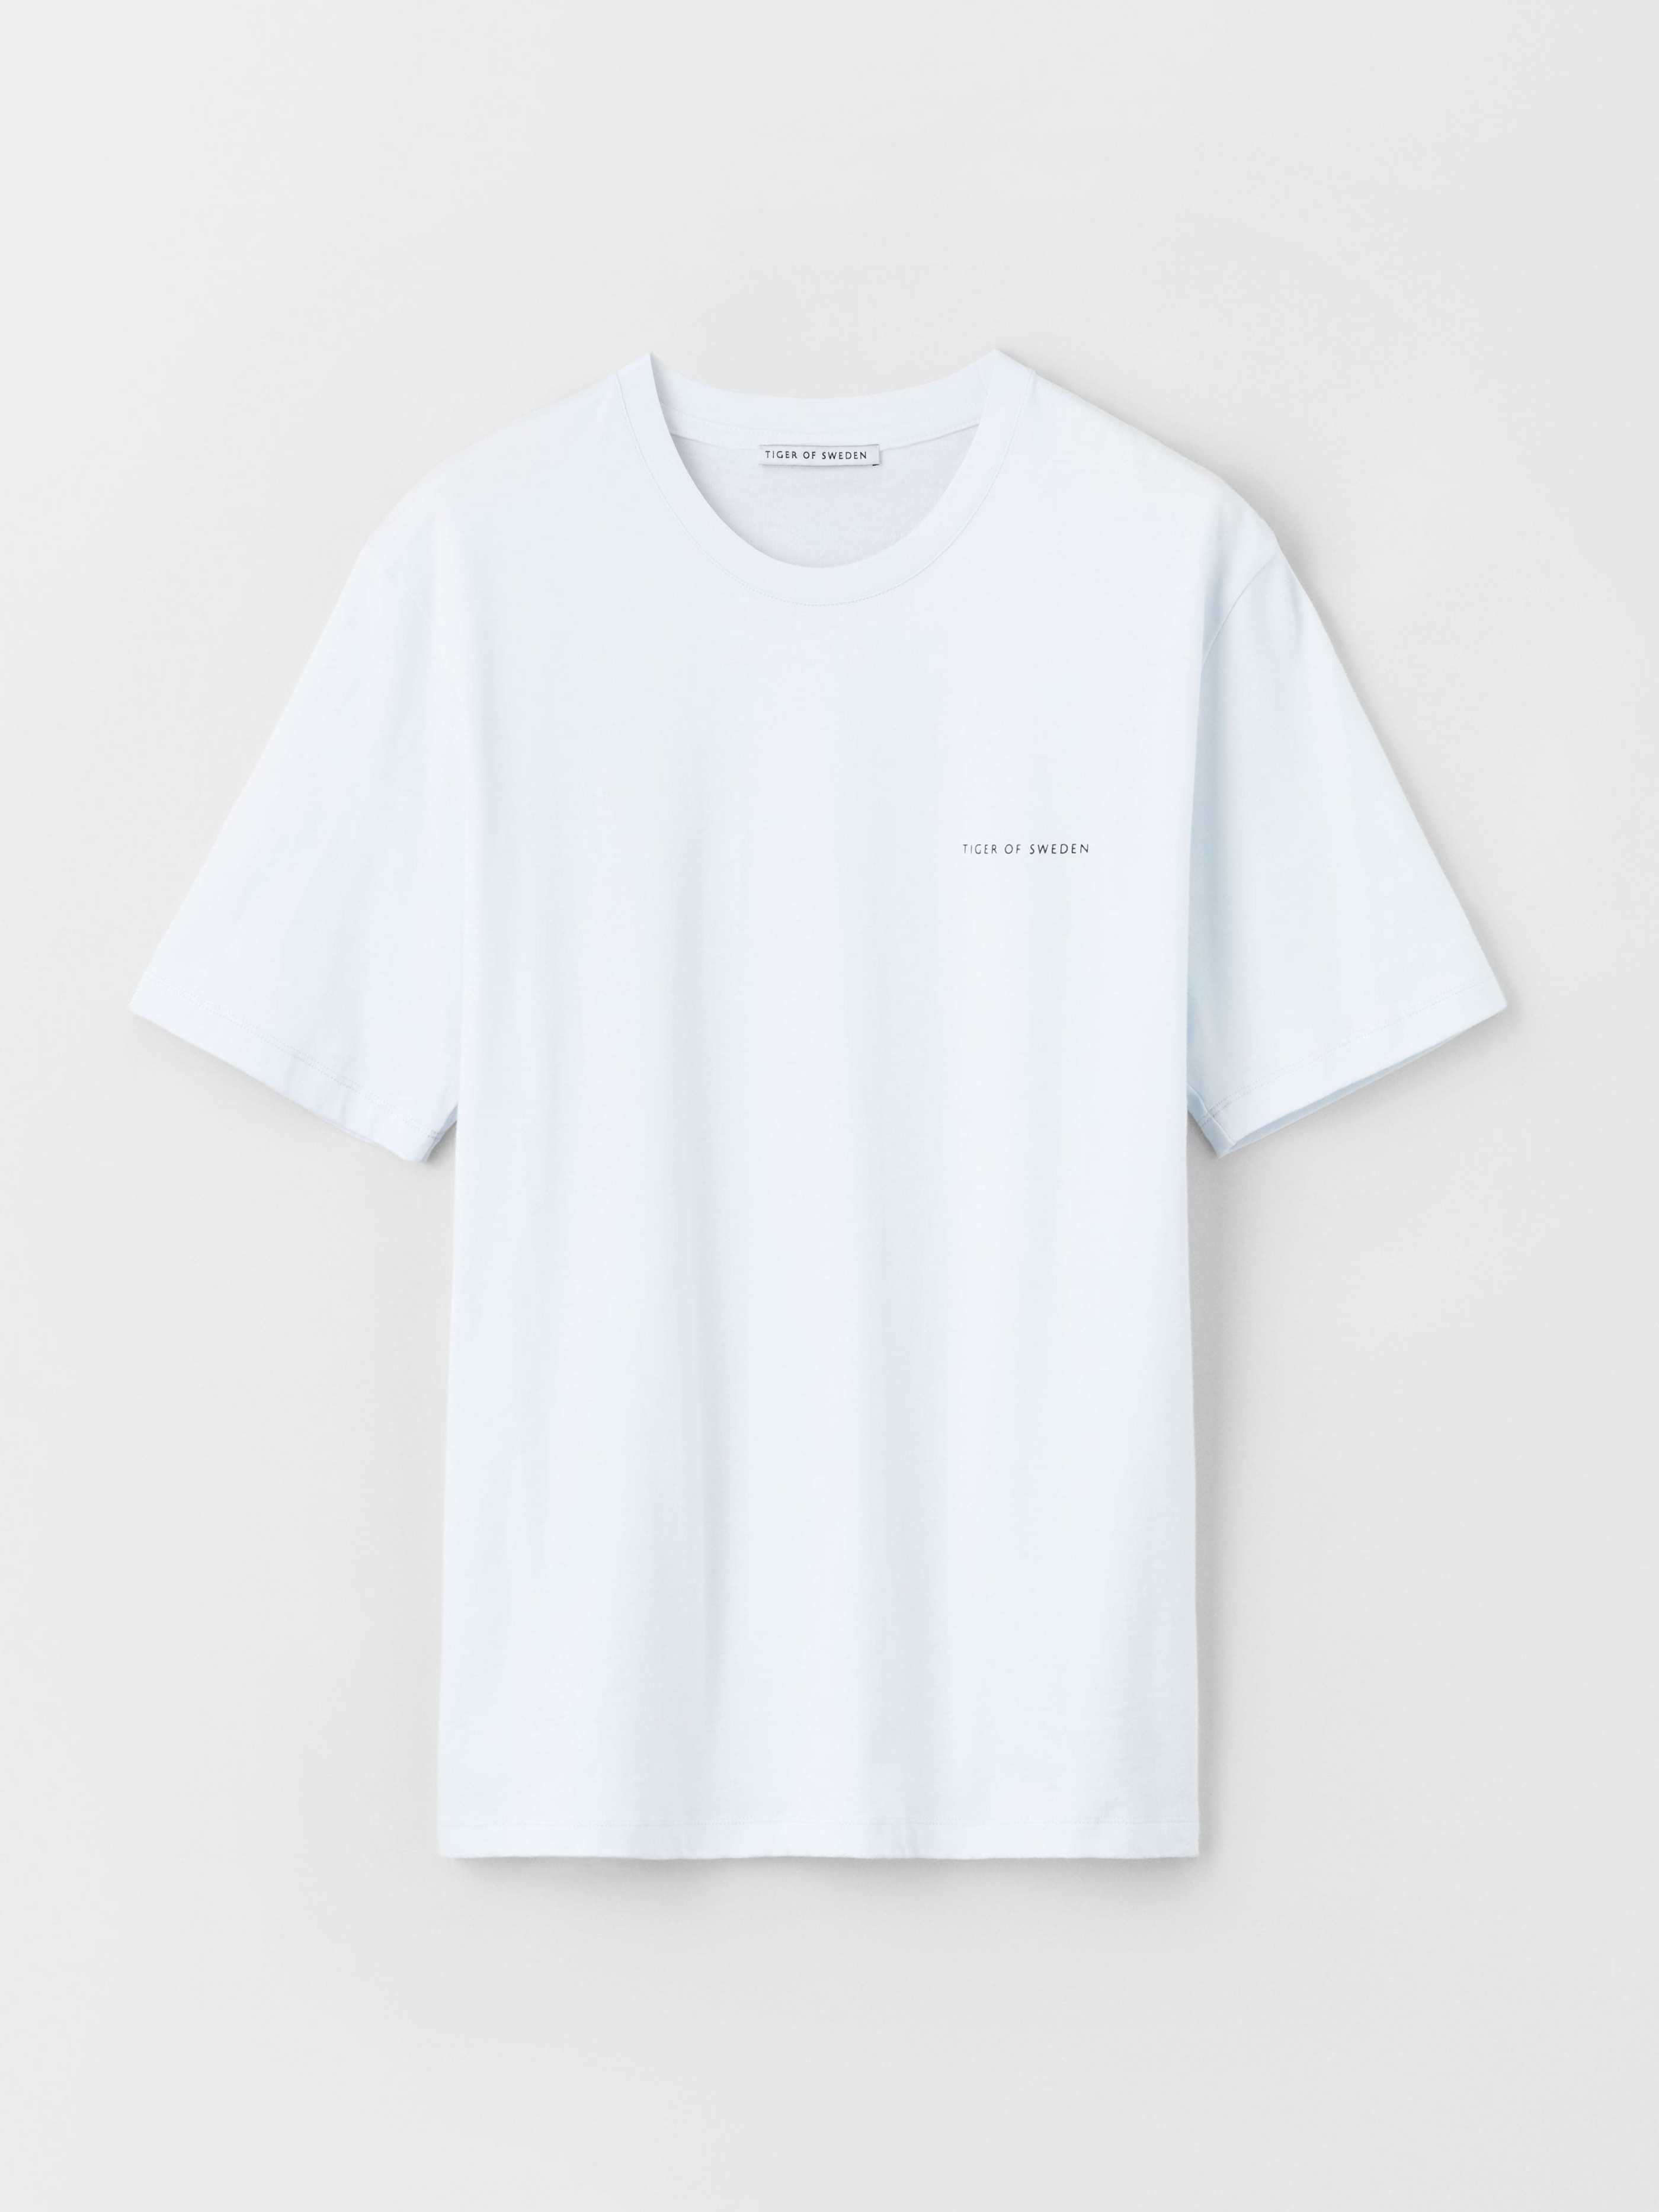 Pro T-shirt - Buy T-shirts online